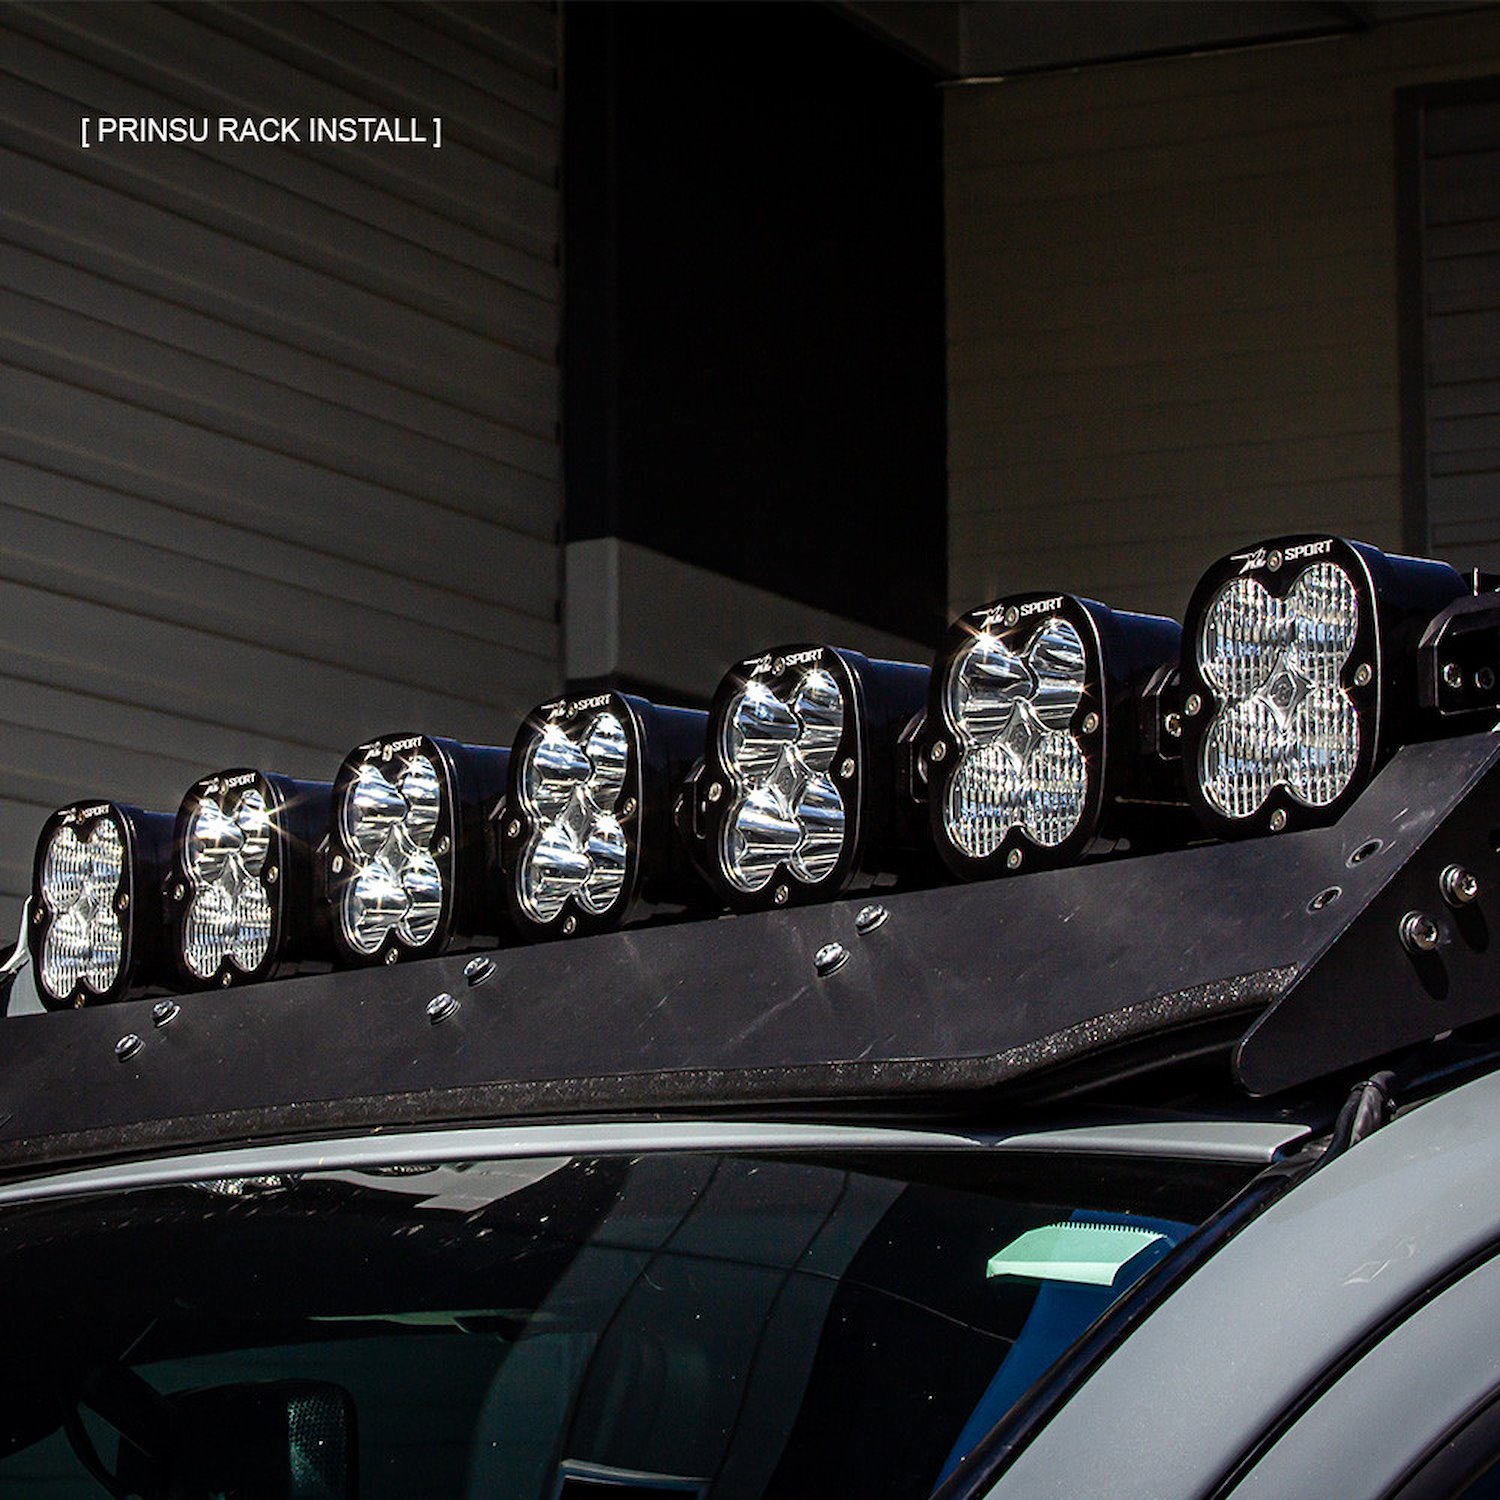 XL Linkable Roof Light Bar Kit For Prinsu Rack Fits Select 2005-2022 Toyota Models